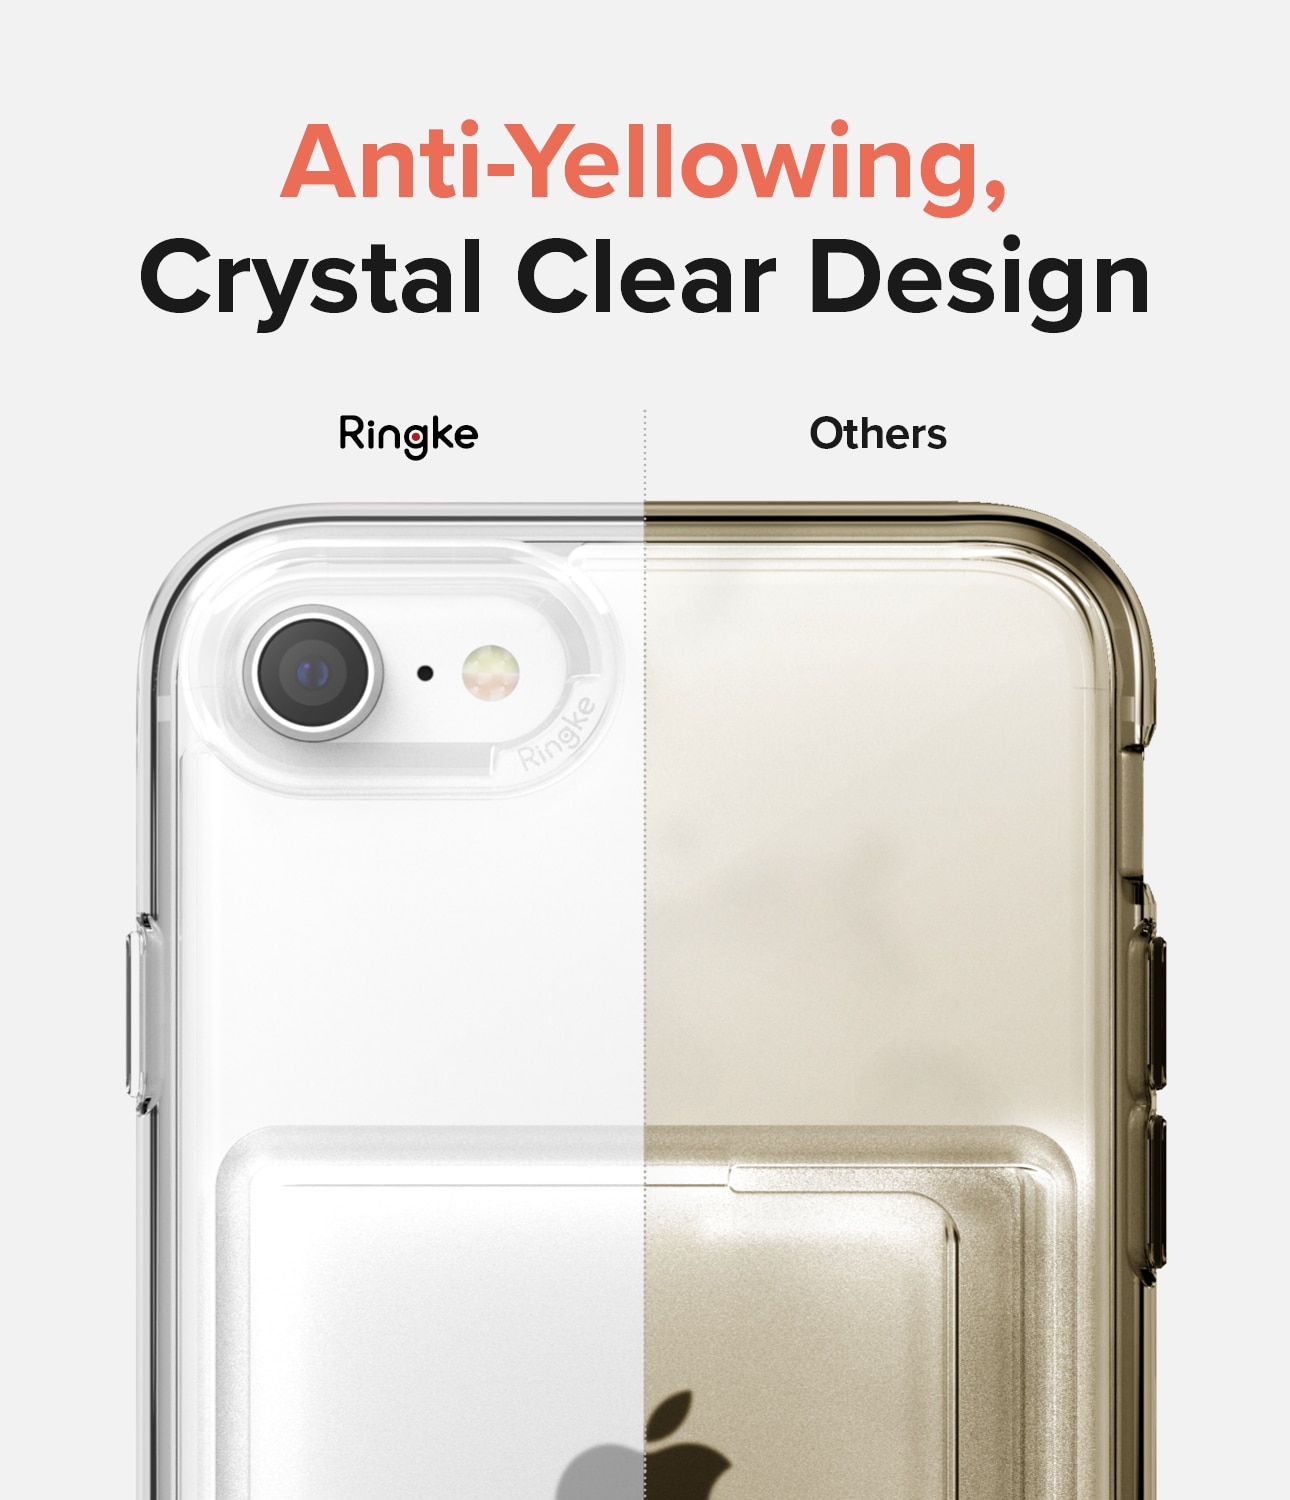 iPhone 8 Fusion Card Case Transparent